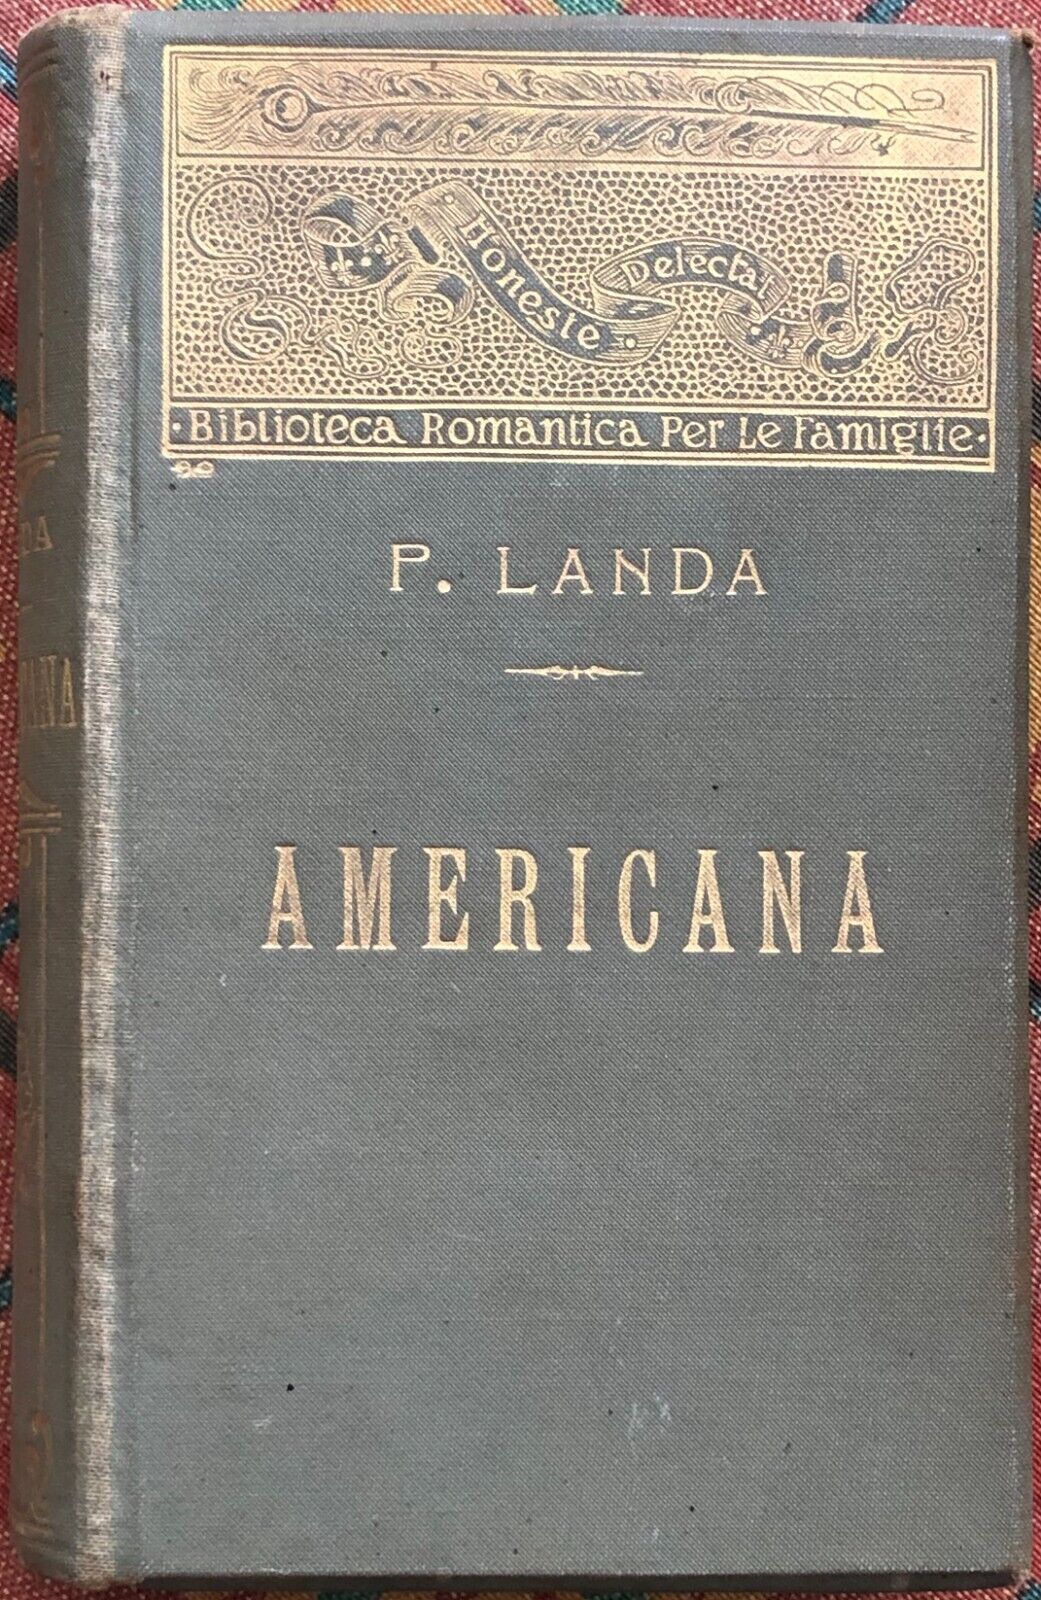  Americana di Pio Landa, Paravia